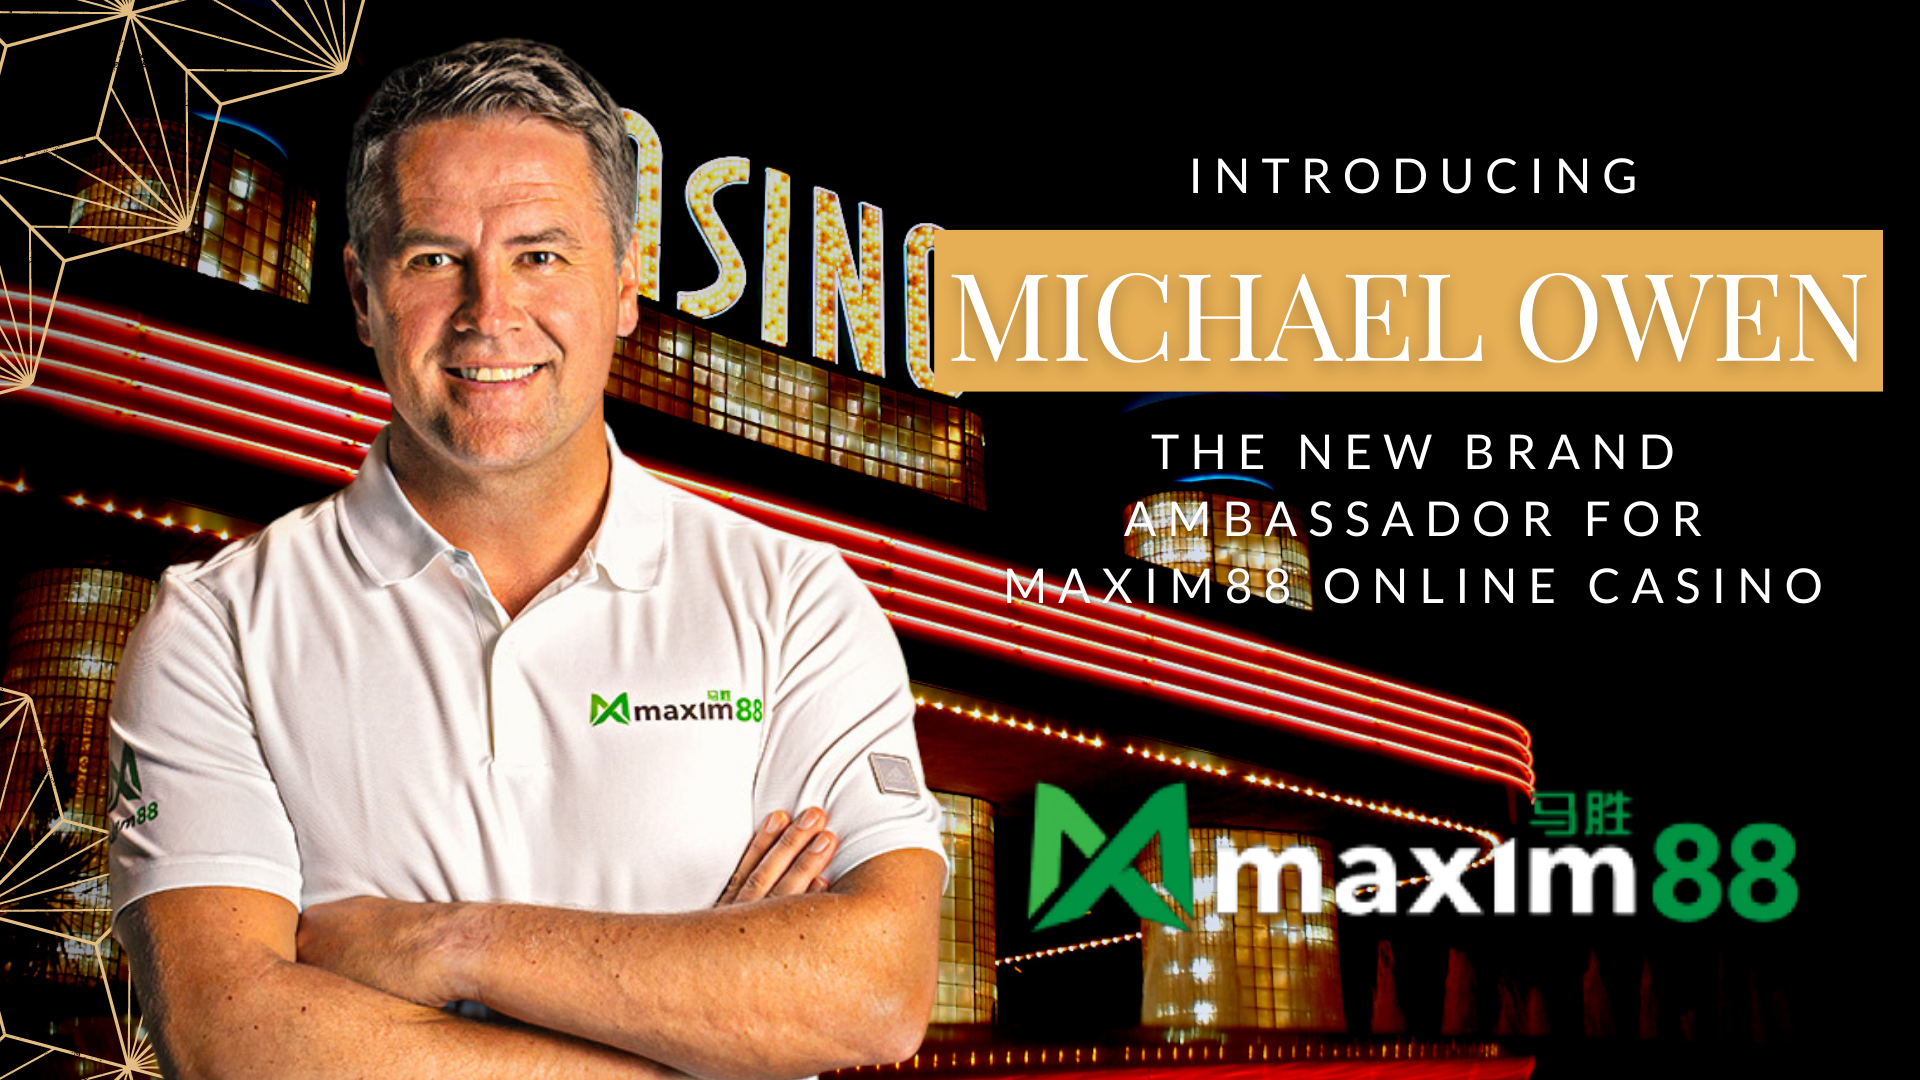 Introducing Michael Owen, the new brand ambassador for Maxim88 online casino